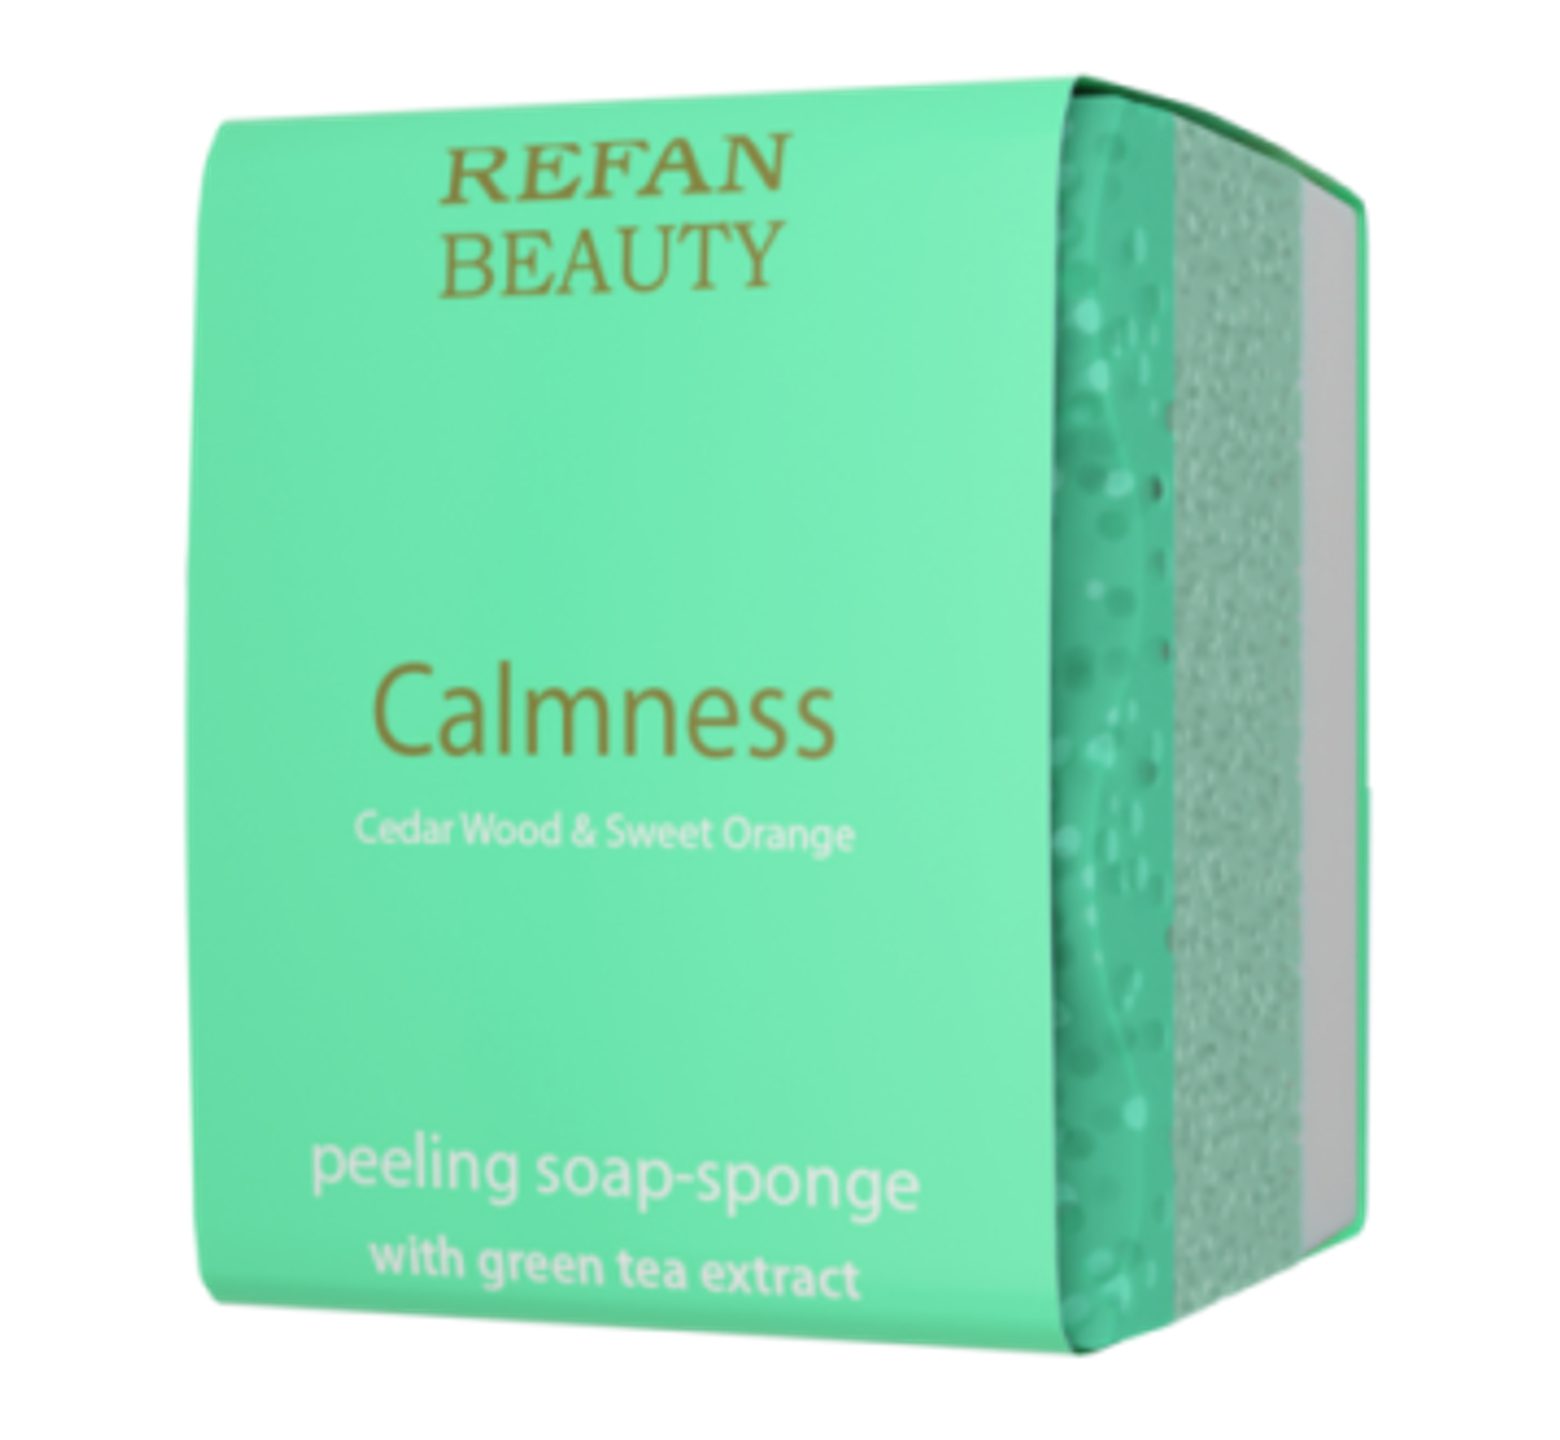 Refan σαπούνι scrub απολέπισης calmness με άρωμα κέδρου, φρέσκων εσπεριδοειδών και μπαχαρικών. Περιέχει εκχύλισμα πράσινου τσαγιού με δροσιστική και αντιοξειδωτική δράση